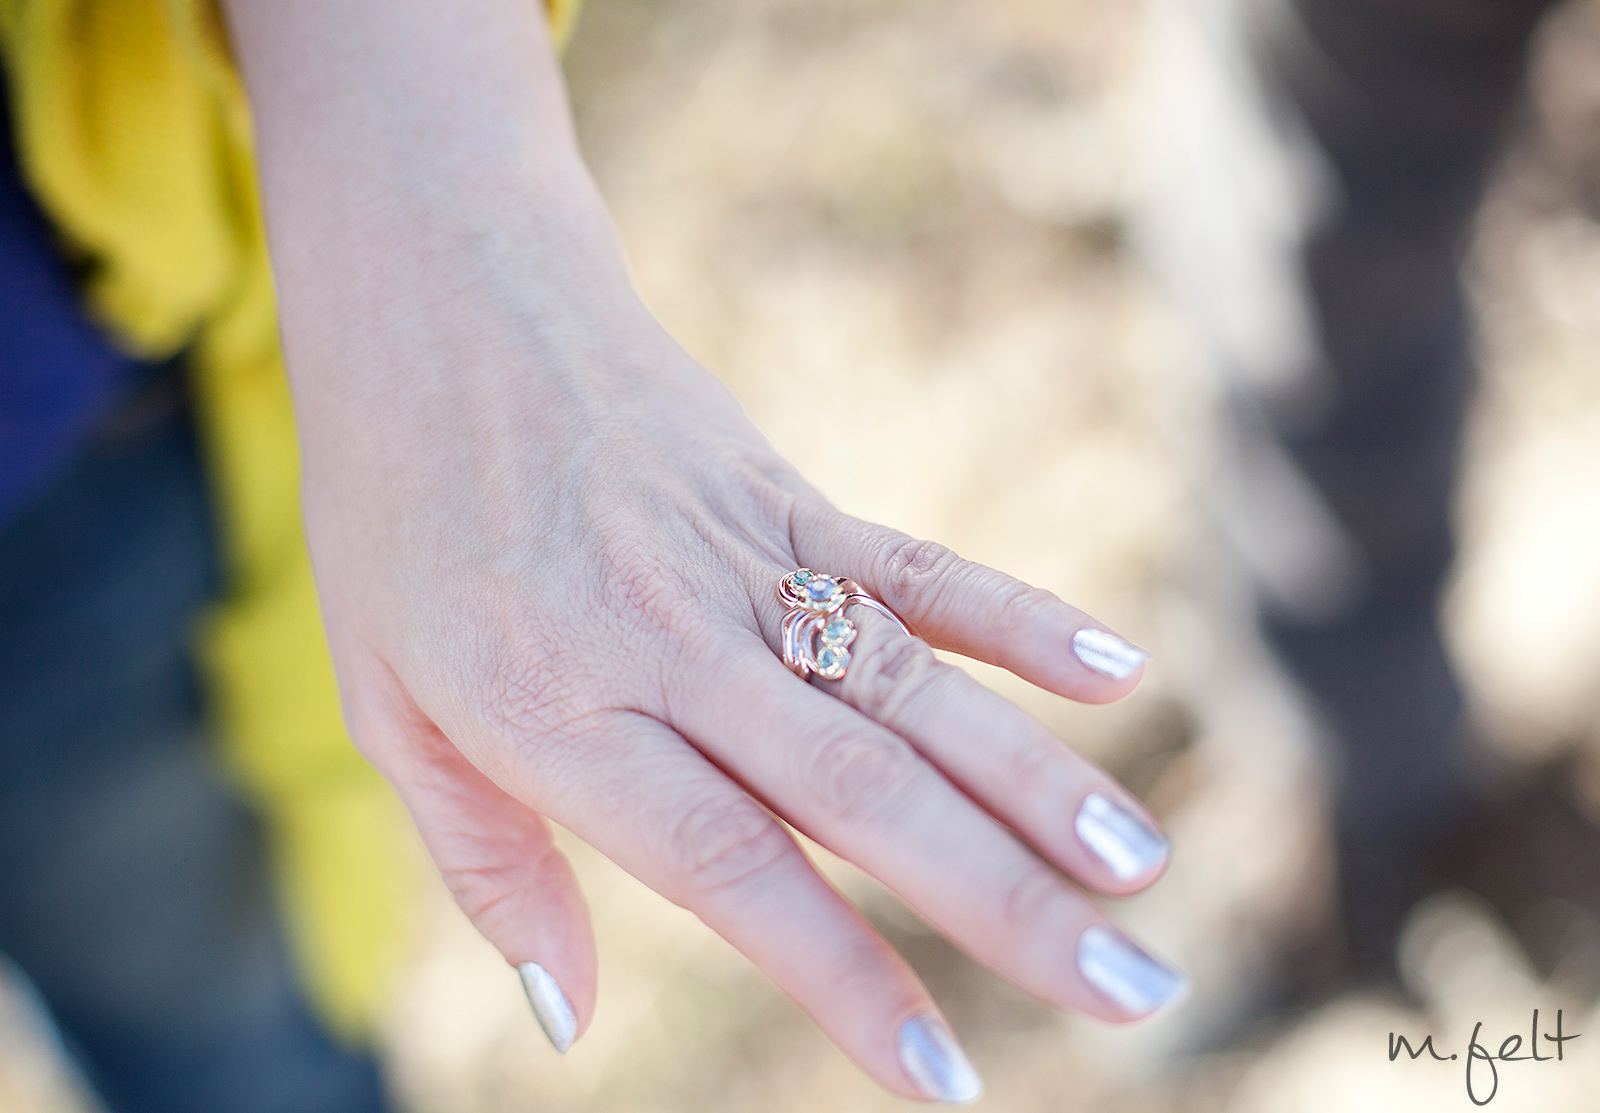 One-of-a-kind Engagement Ring Designed by Craig Elliott - Southern Utah Engagement - M Felt Photography - www.mfeltphotography.com